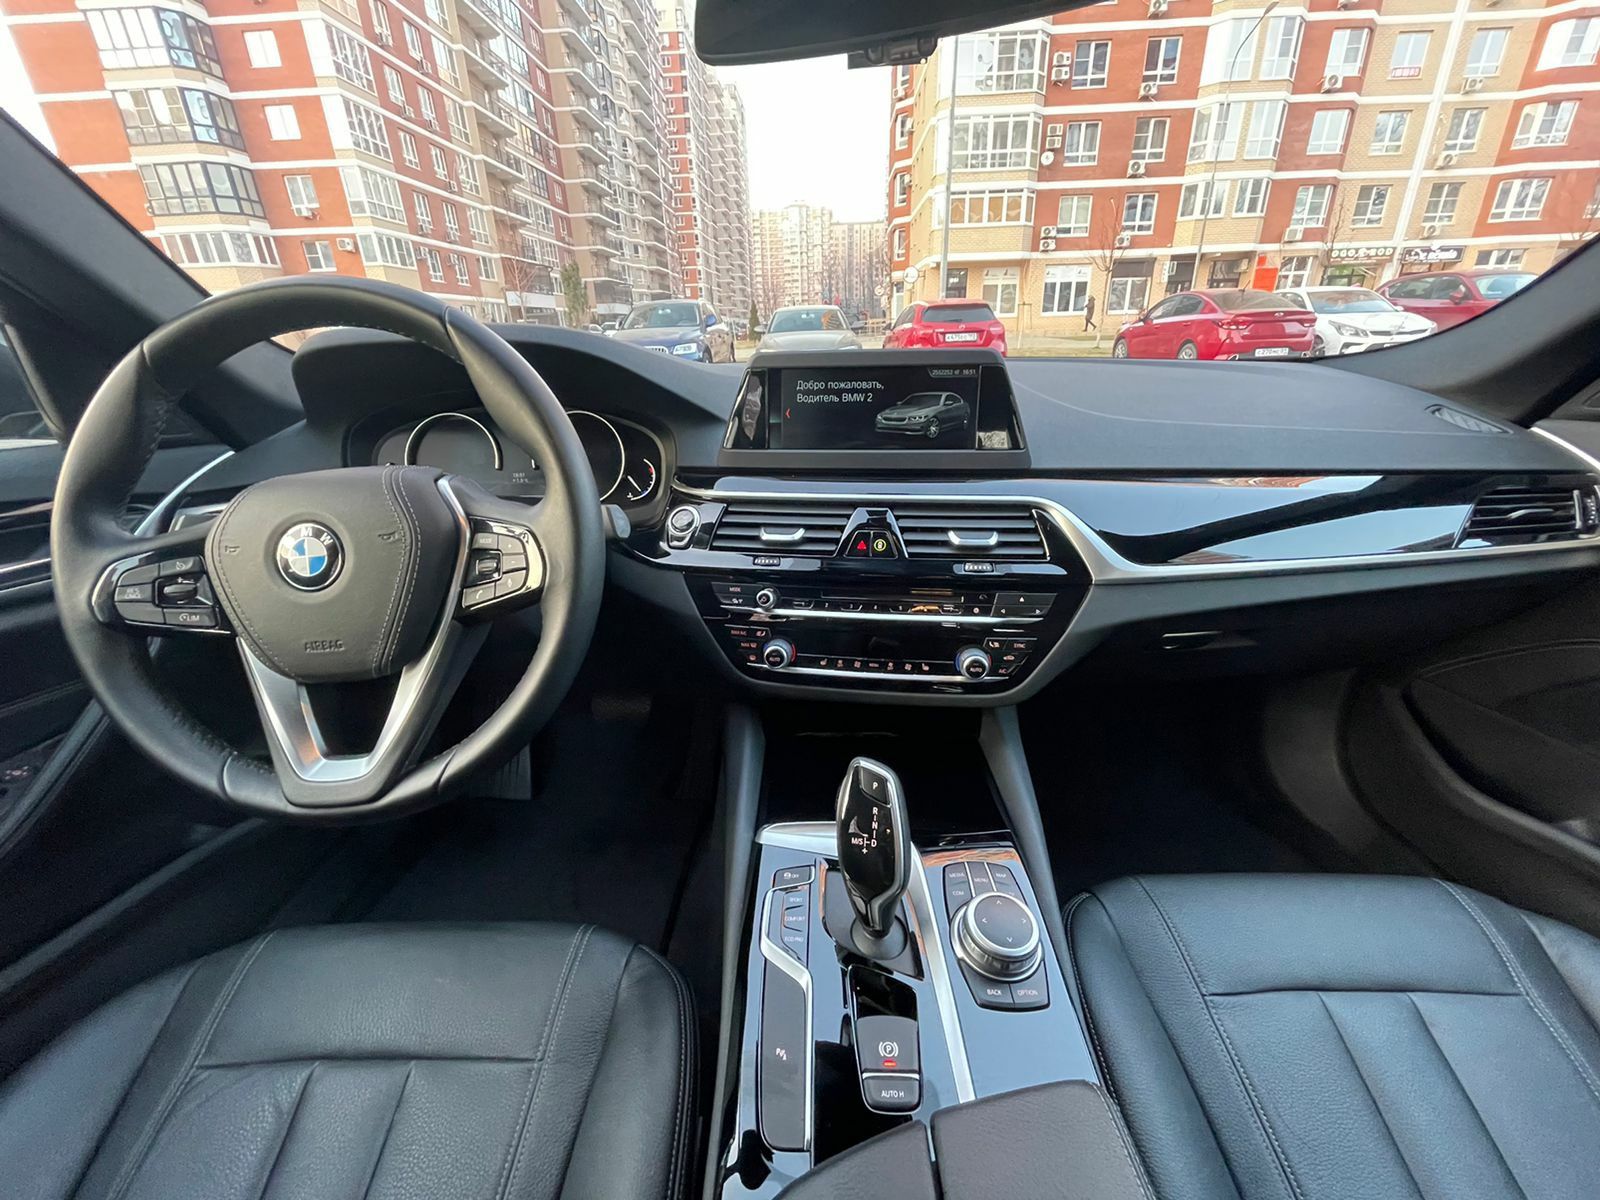 BMW 530i xDrive 2019 individual